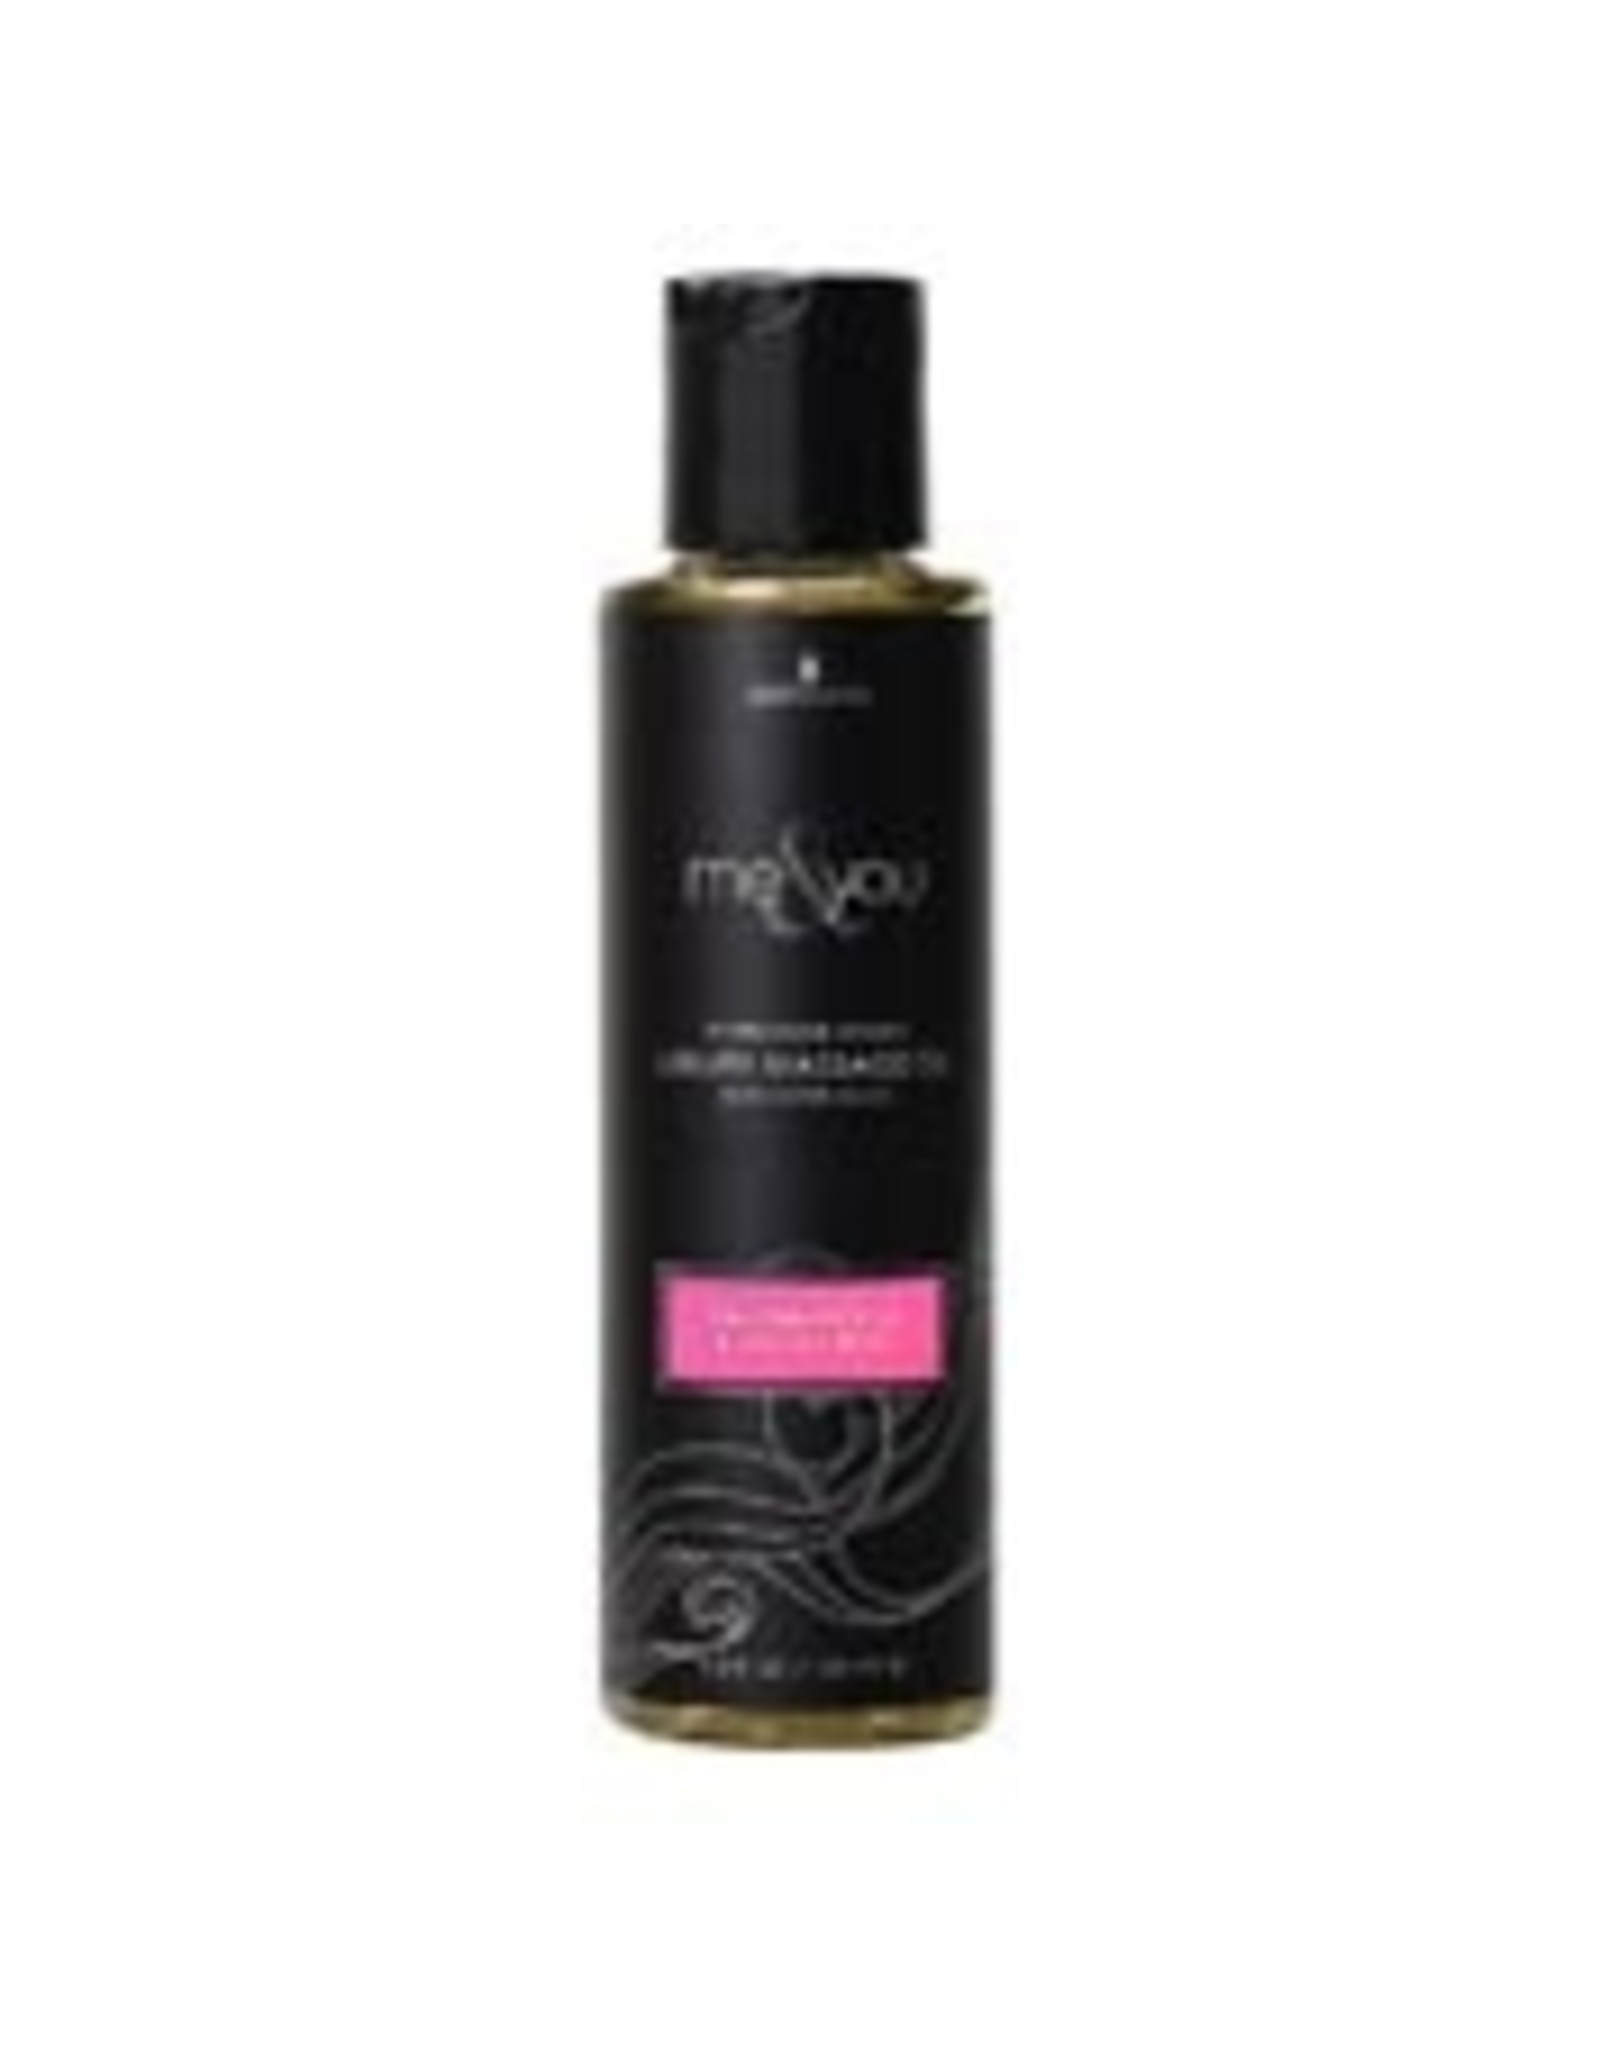 Sensuva Me & You Massage Oil - 4.2 oz Grapefruit Vanilla